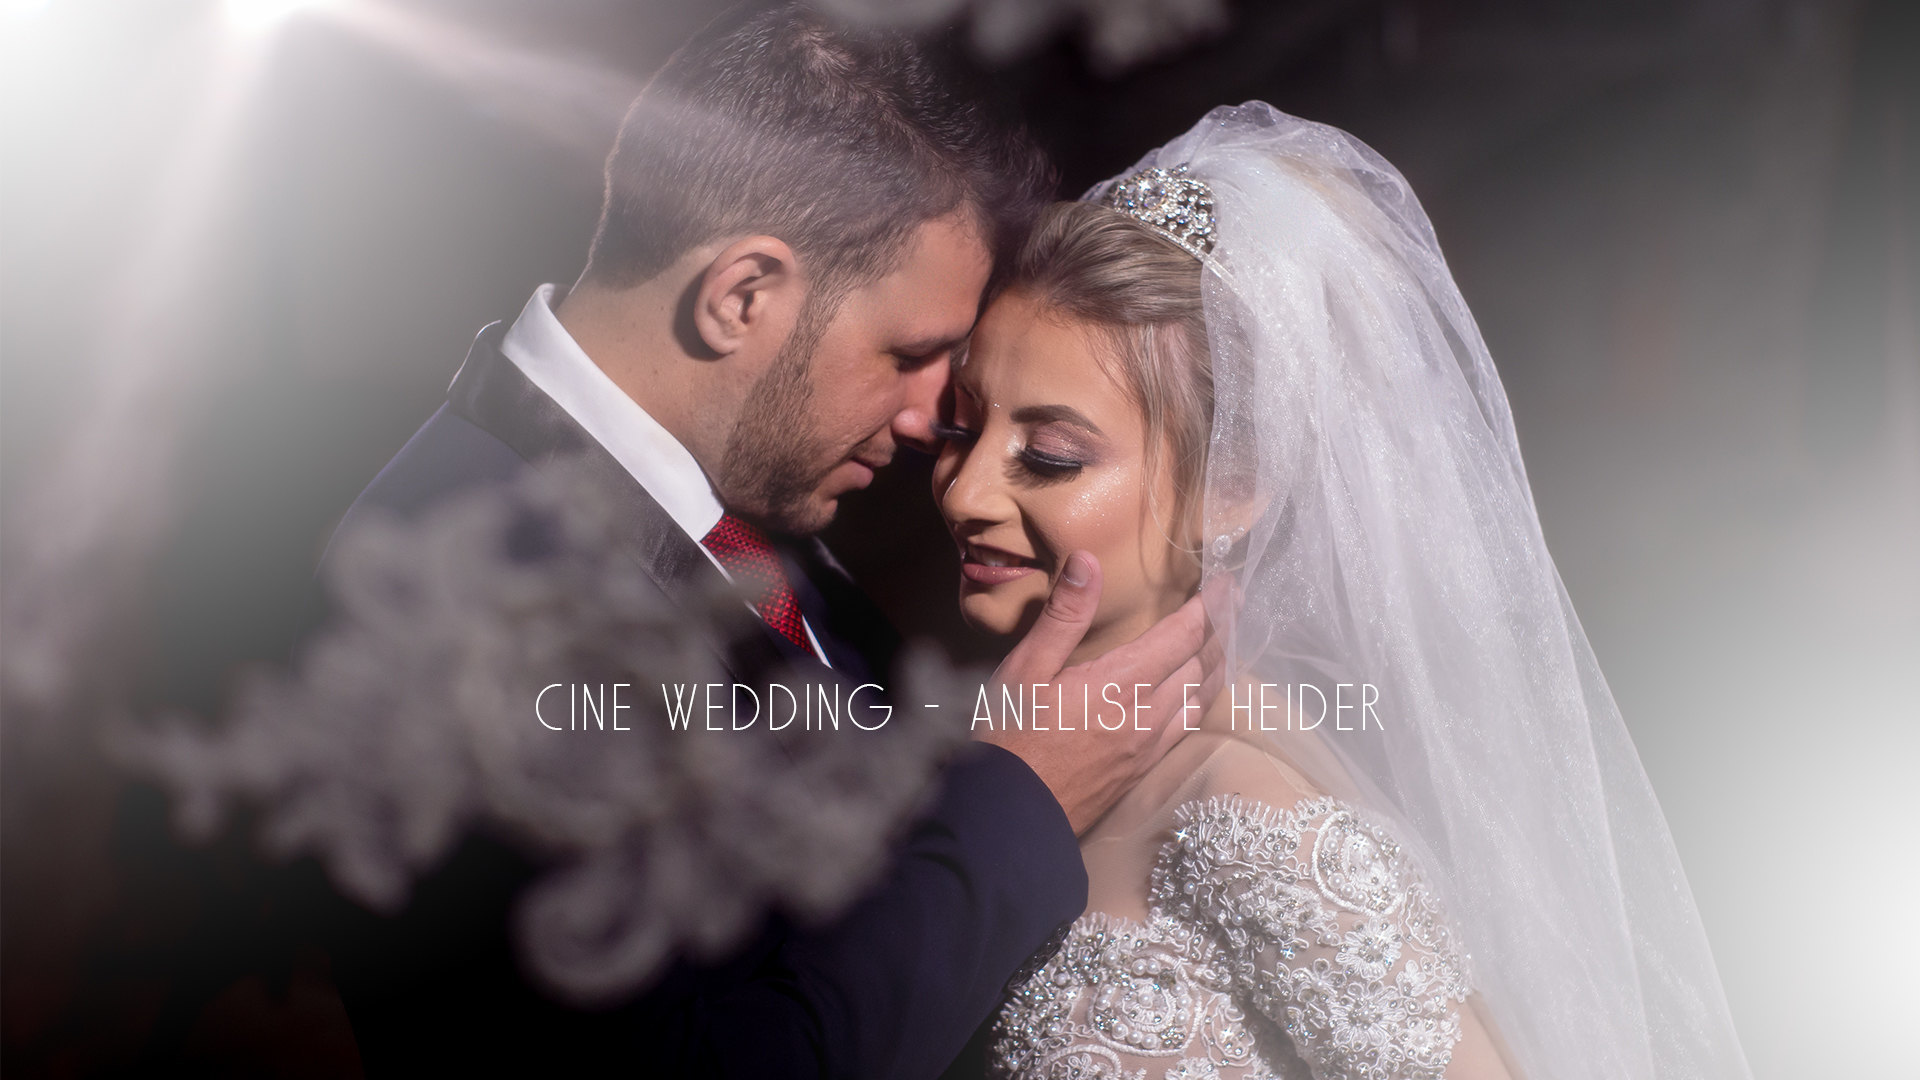 Wedding Day - Anelise e Heider